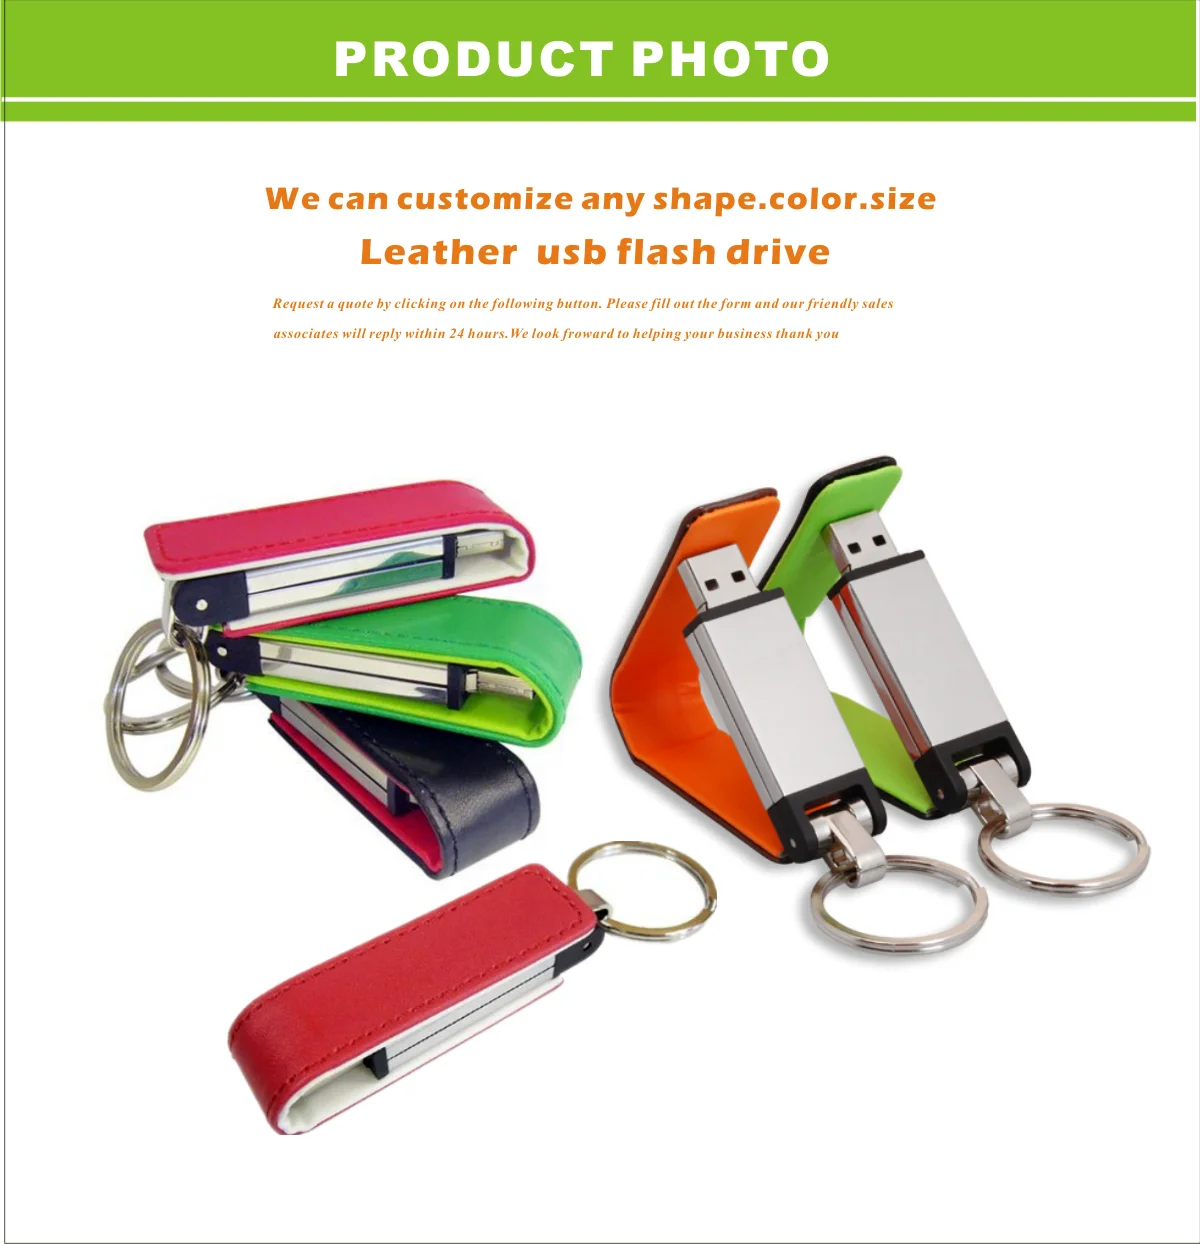 M-LG09 Leather usb flash drive